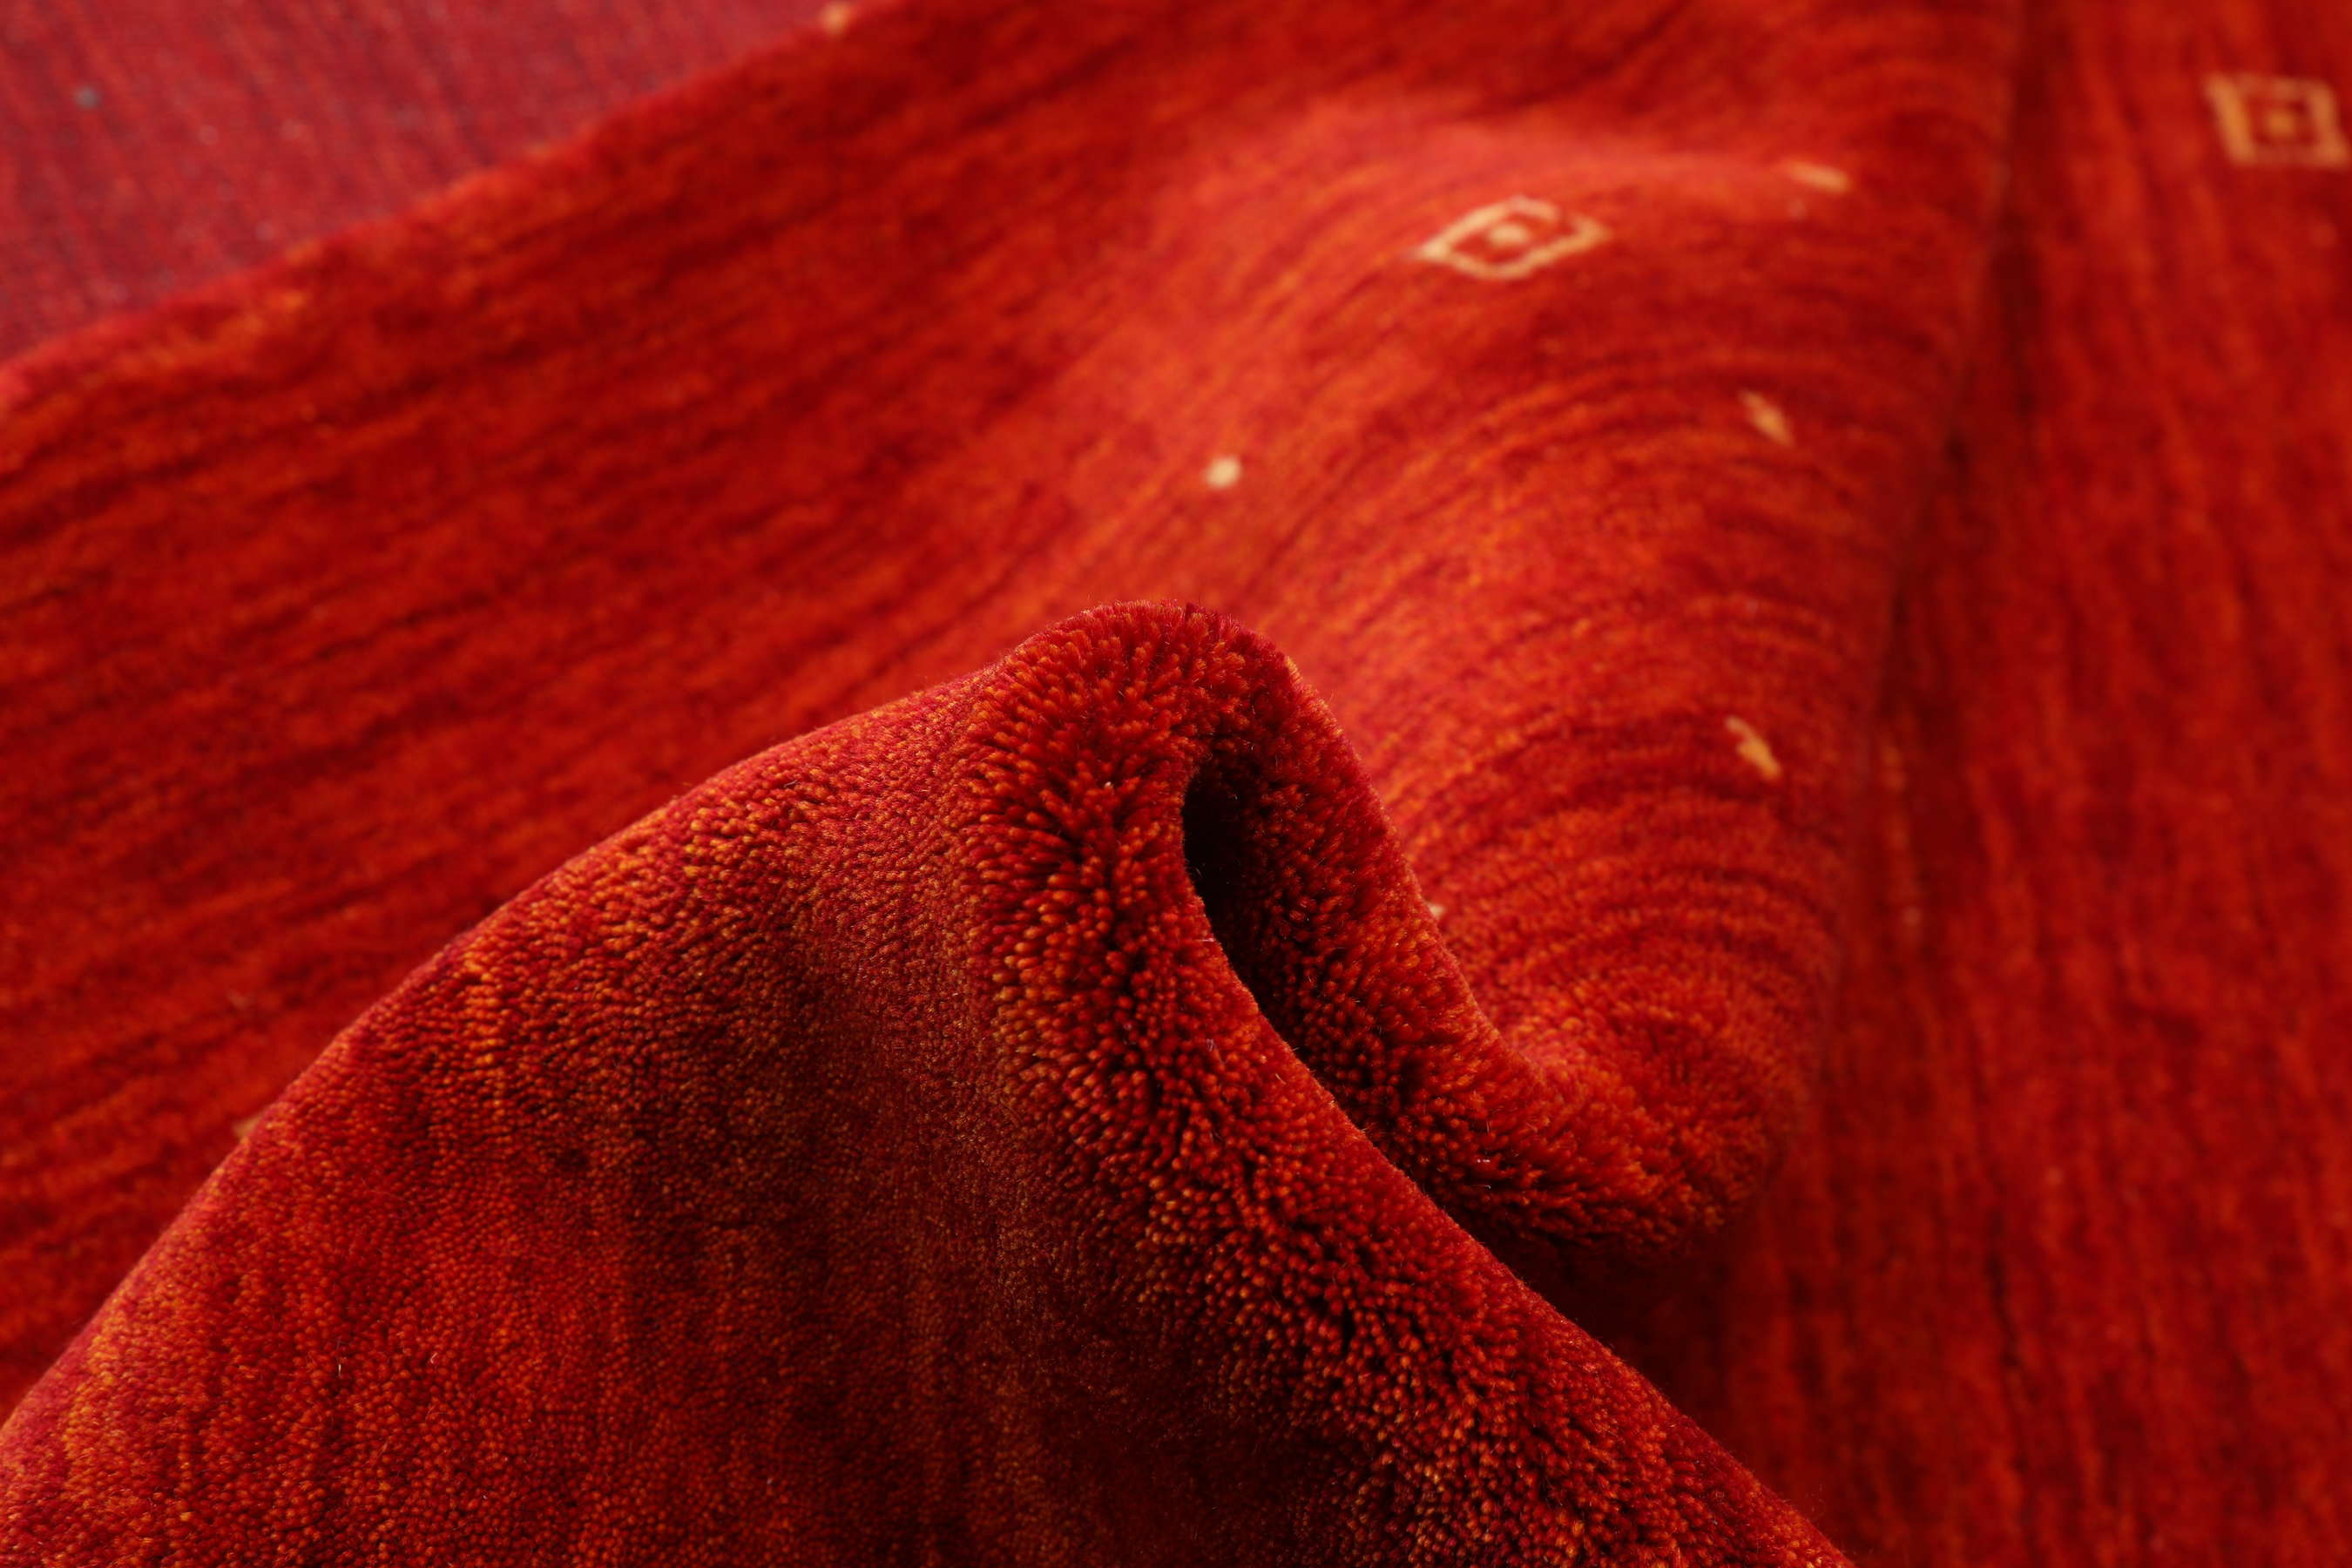 
    Loribaf Loom Fine Delta - Red - 140 x 200 cm
  